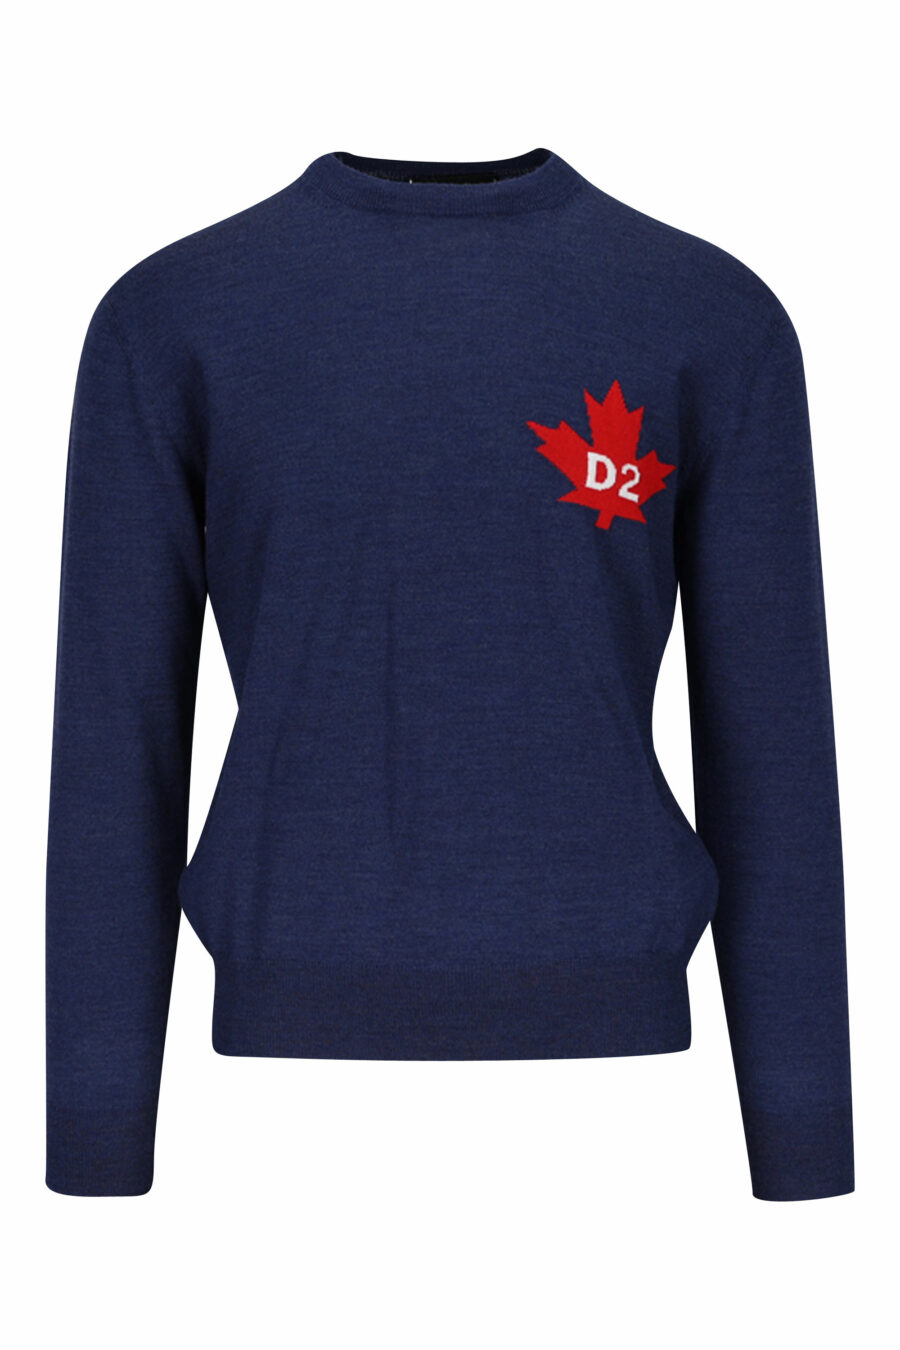 Blue jumper with mini-logo "D2" on leaf - 8054148057985 2